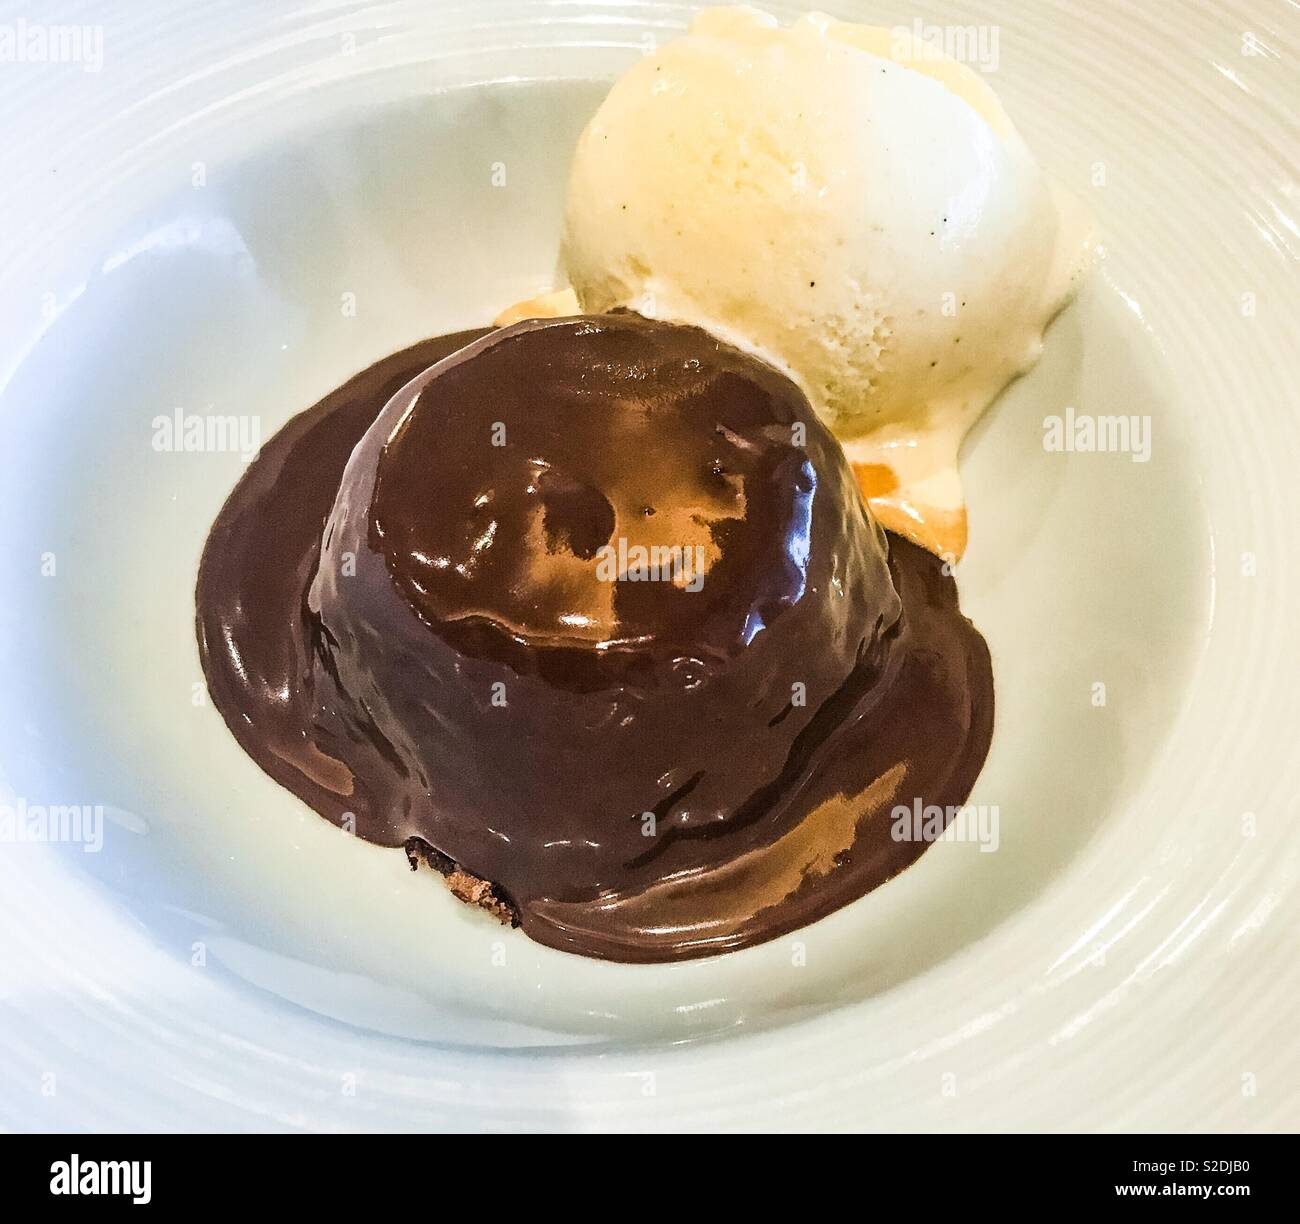 Chocolate pudding and ice cream dessert Stock Photo